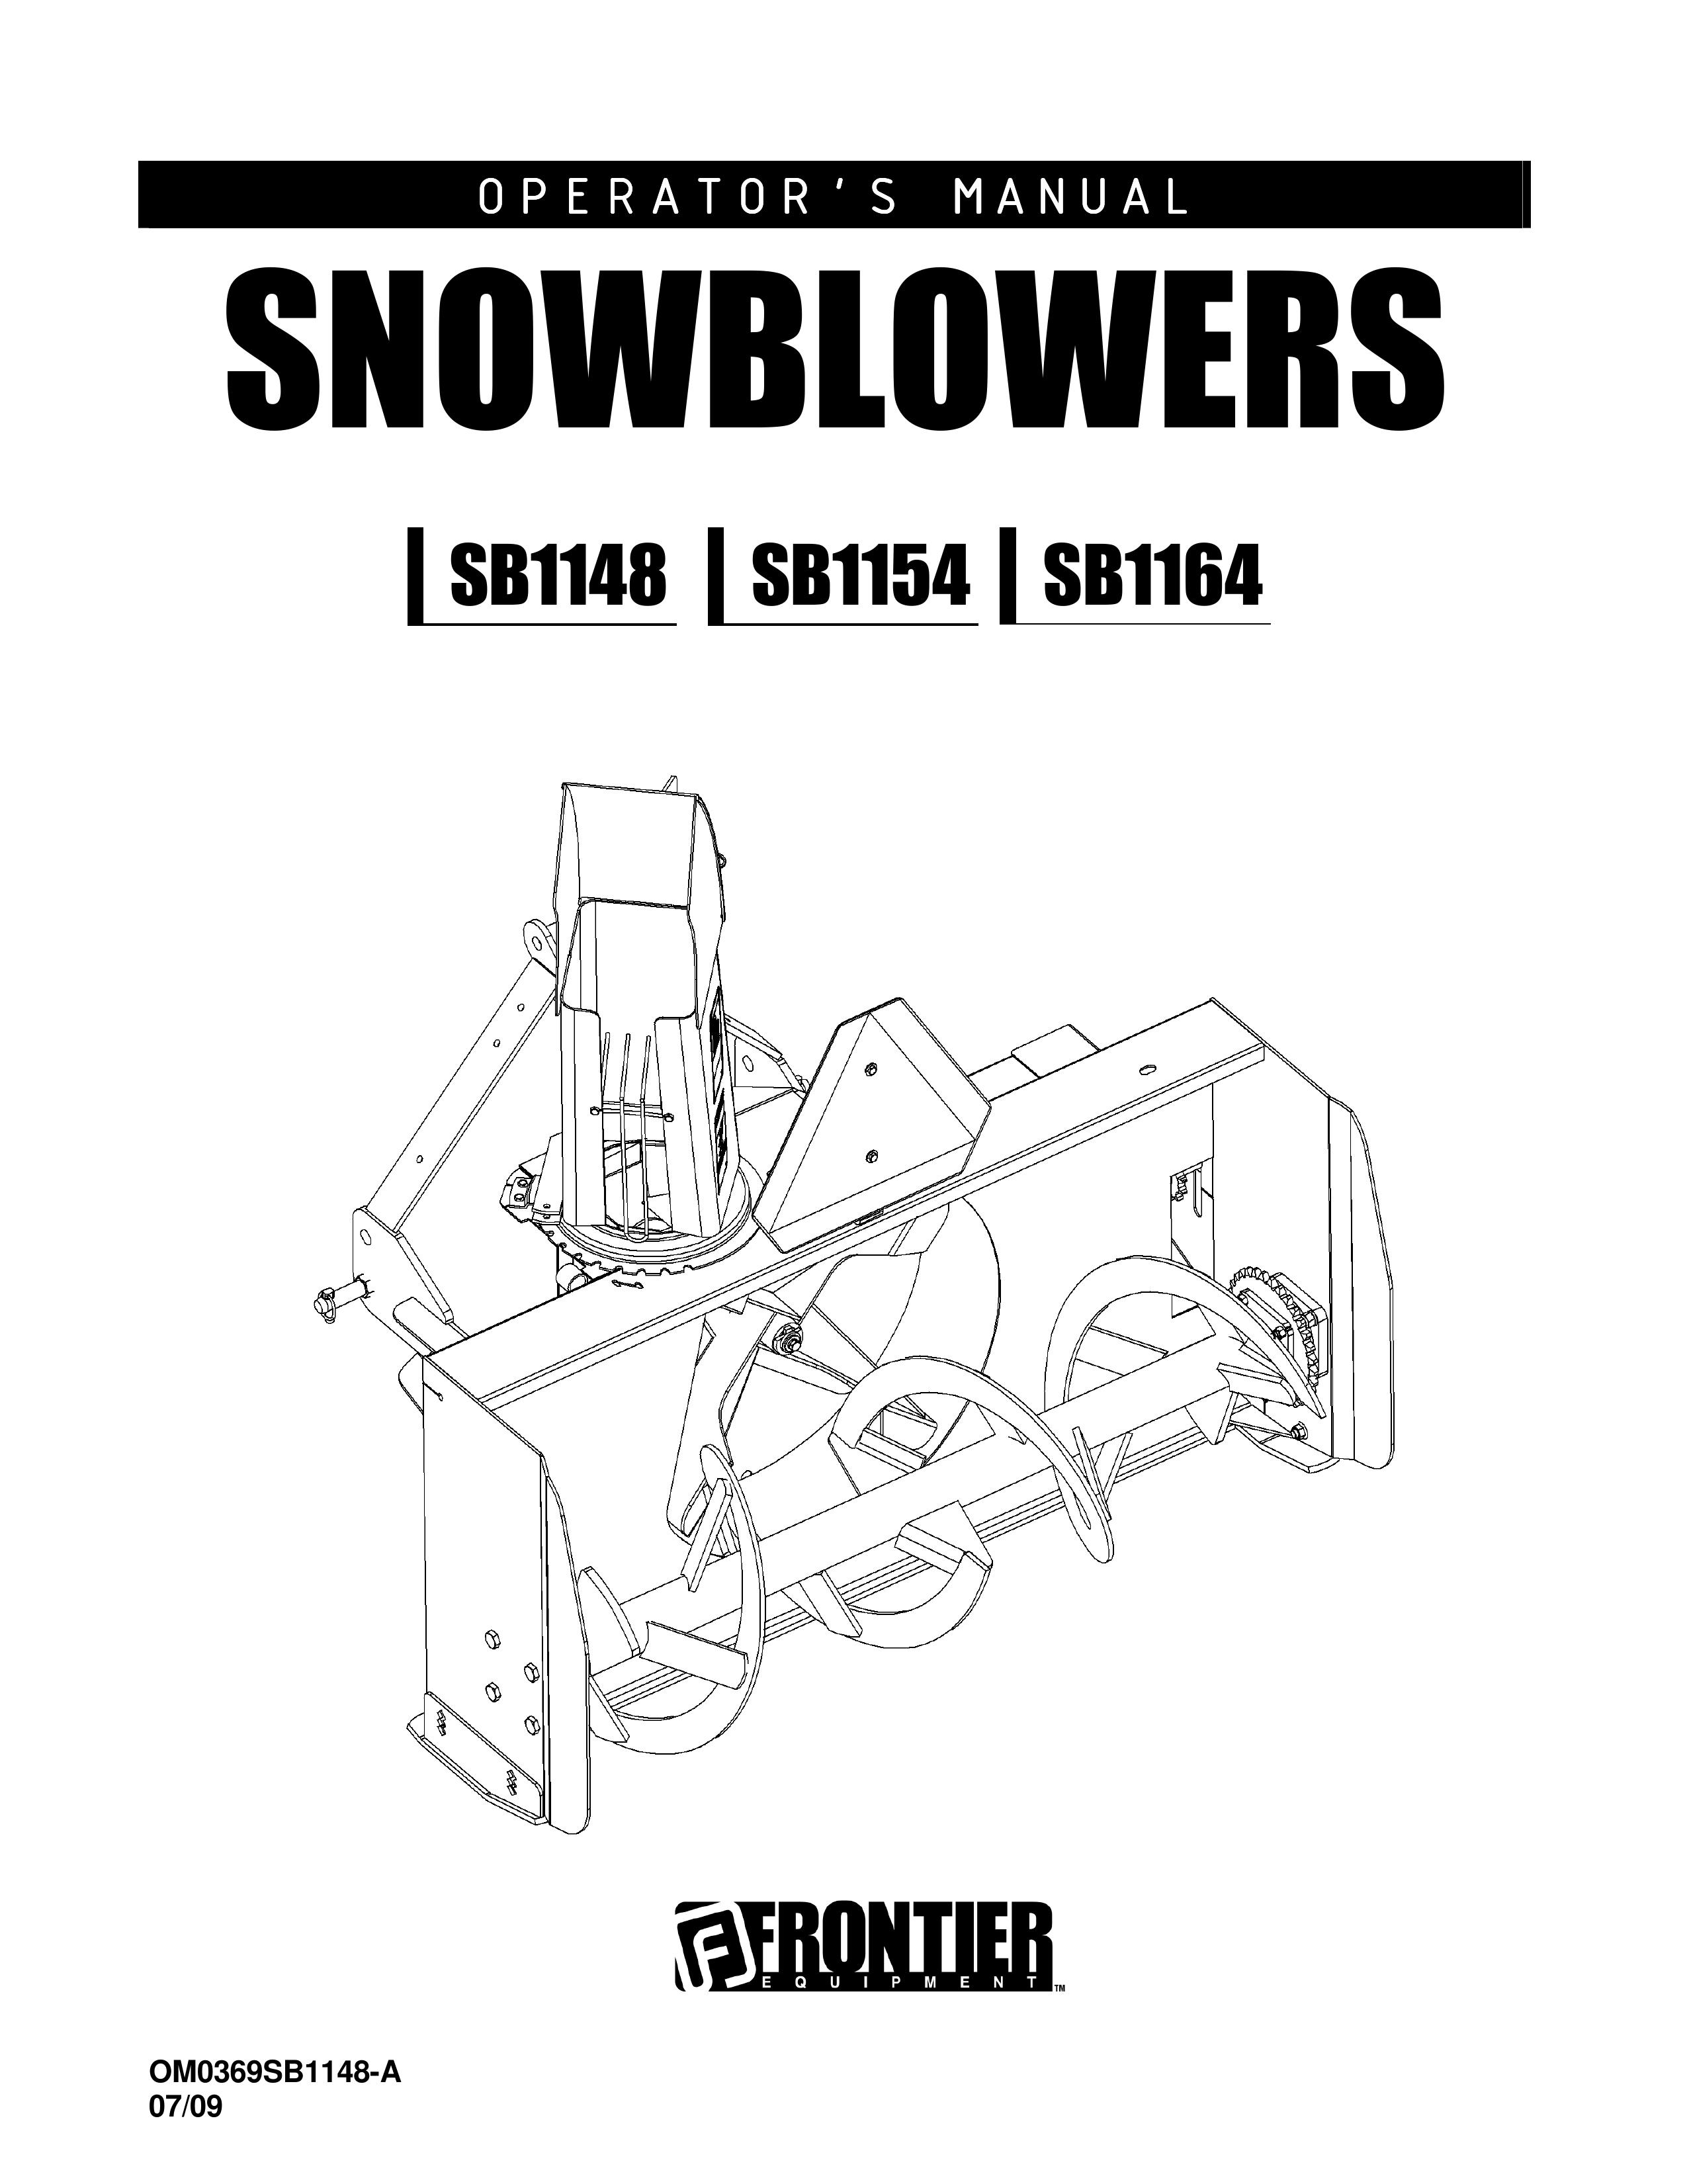 John Deere SB1164 Snow Blower User Manual